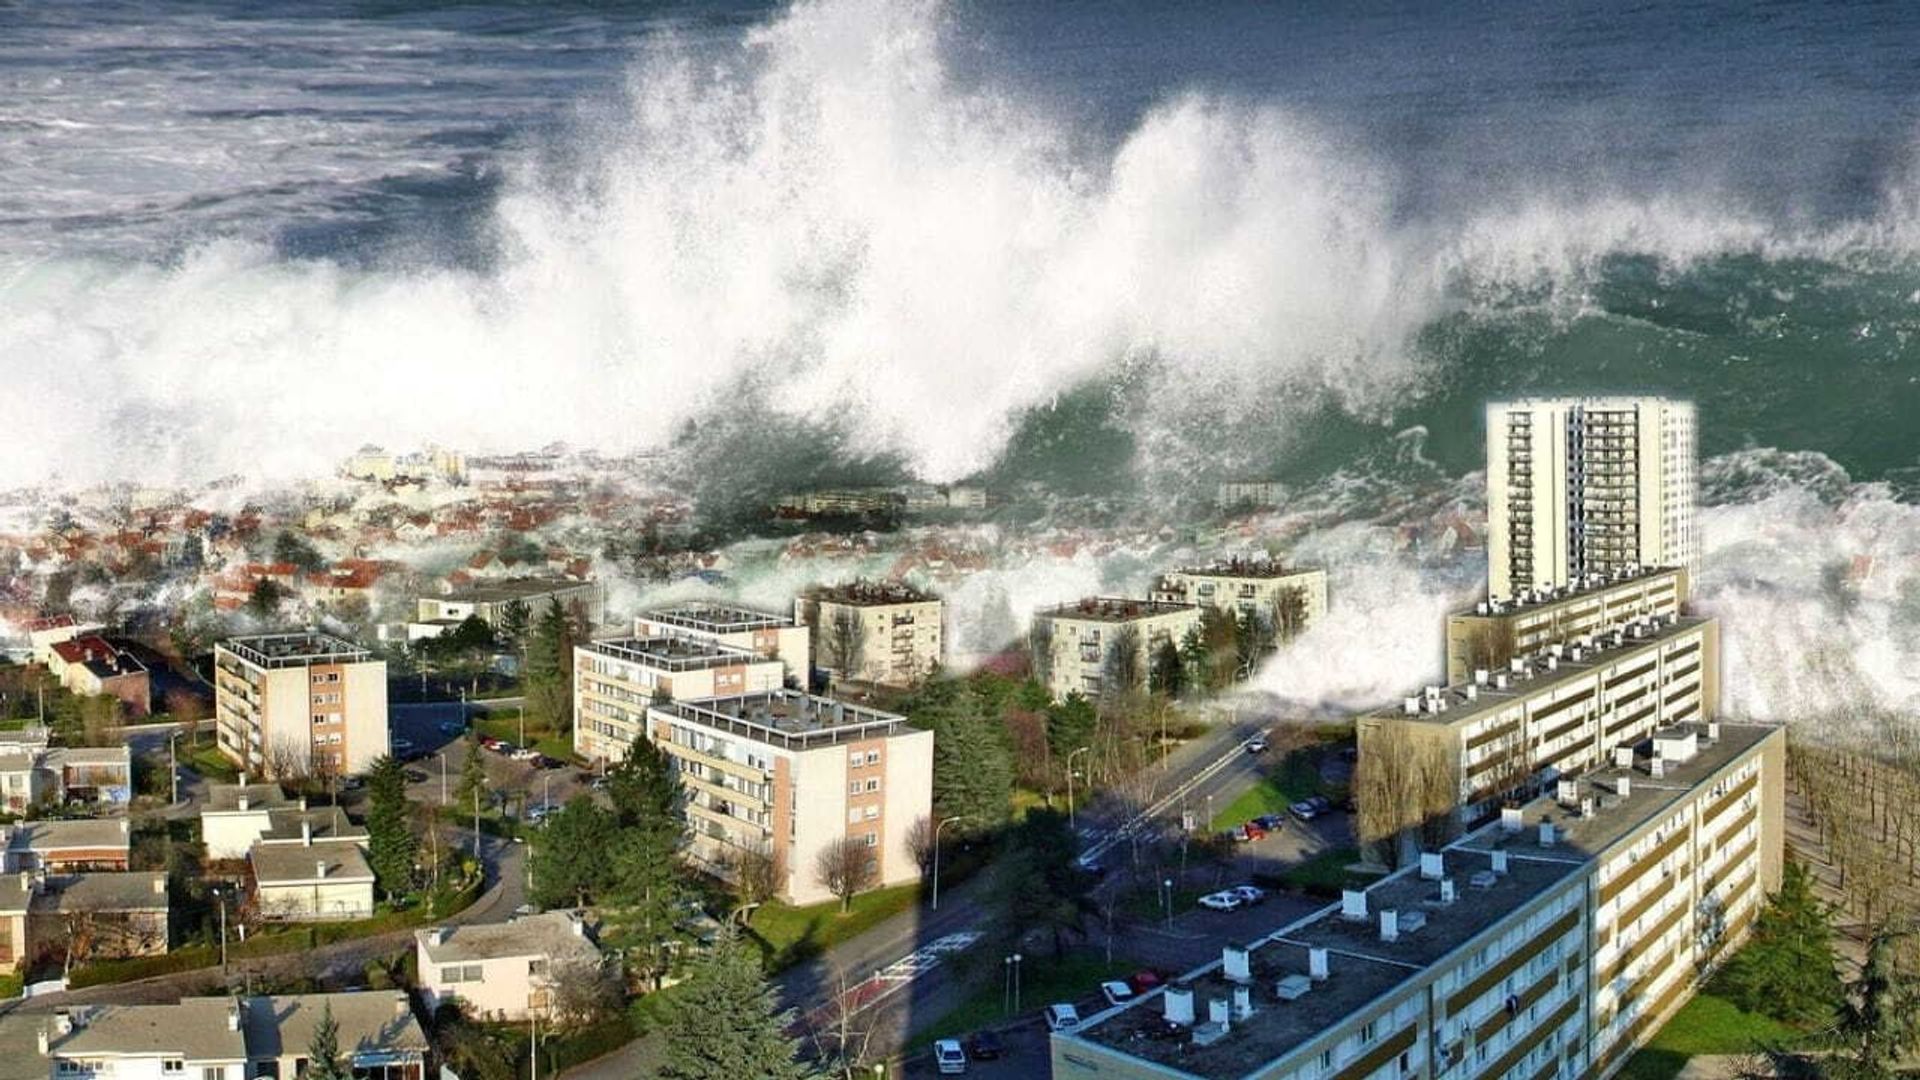 Tsunami: The Aftermath background